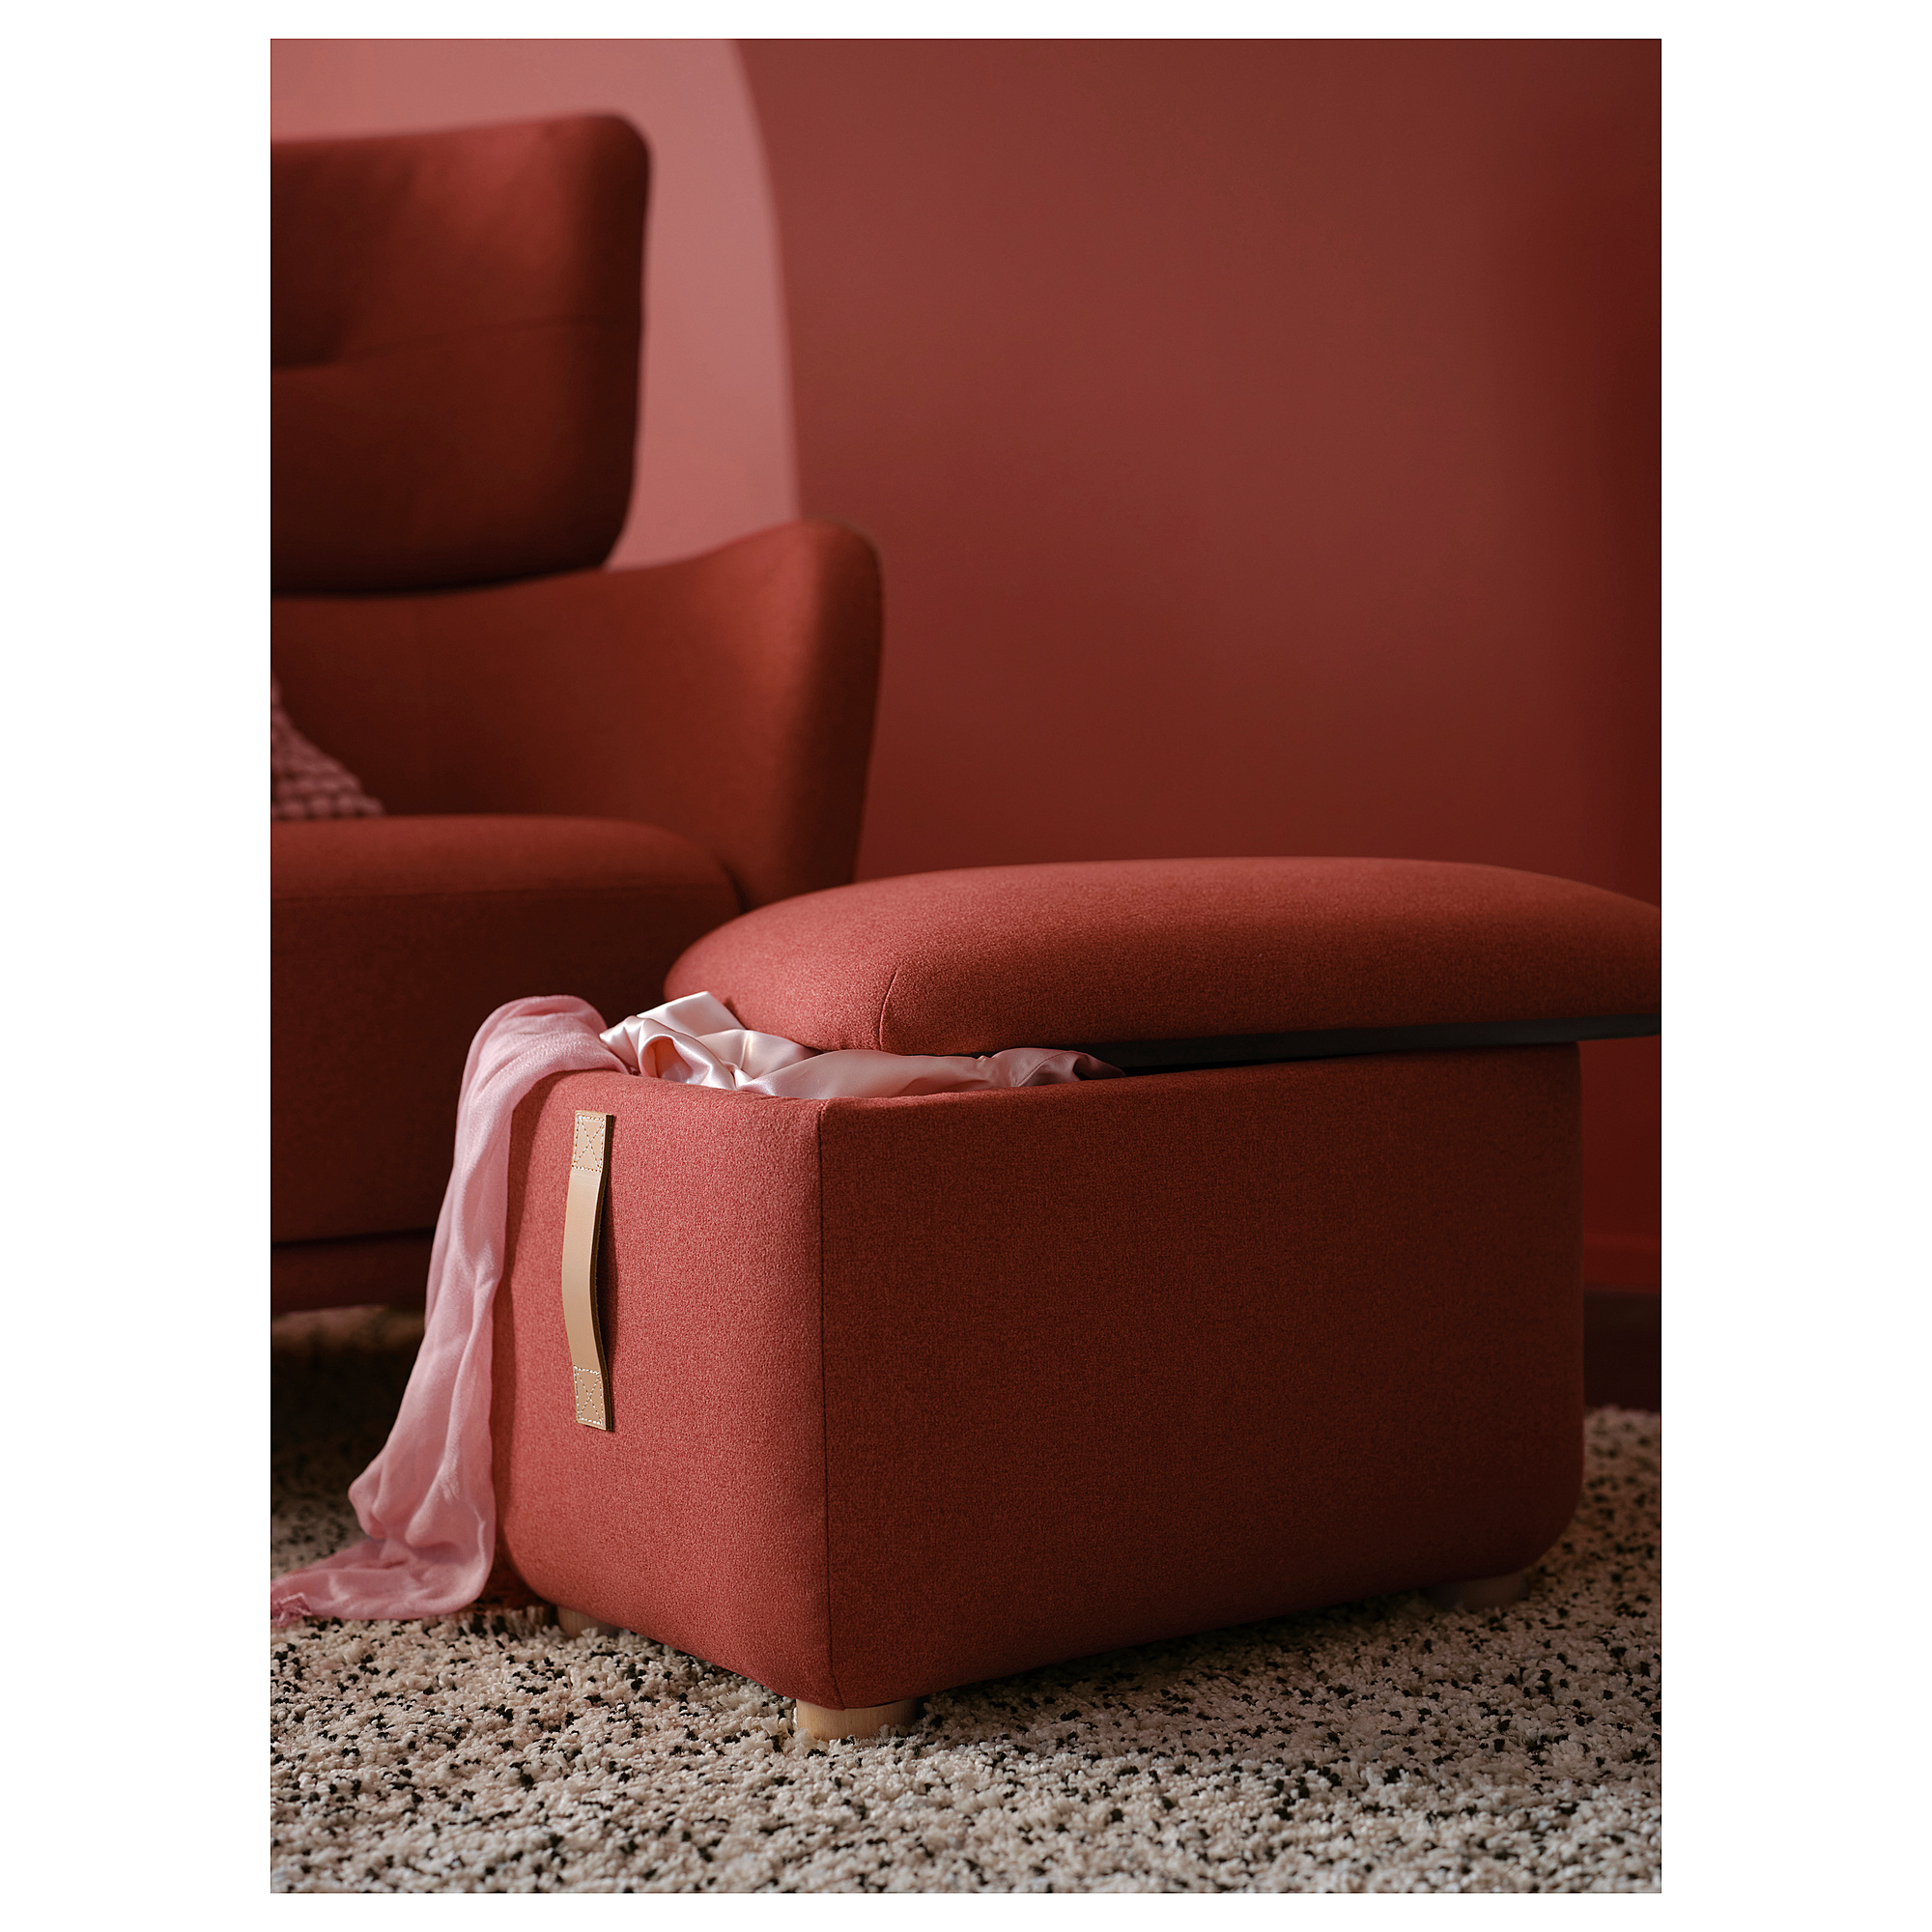 OSKARSHAMN footstool with storage